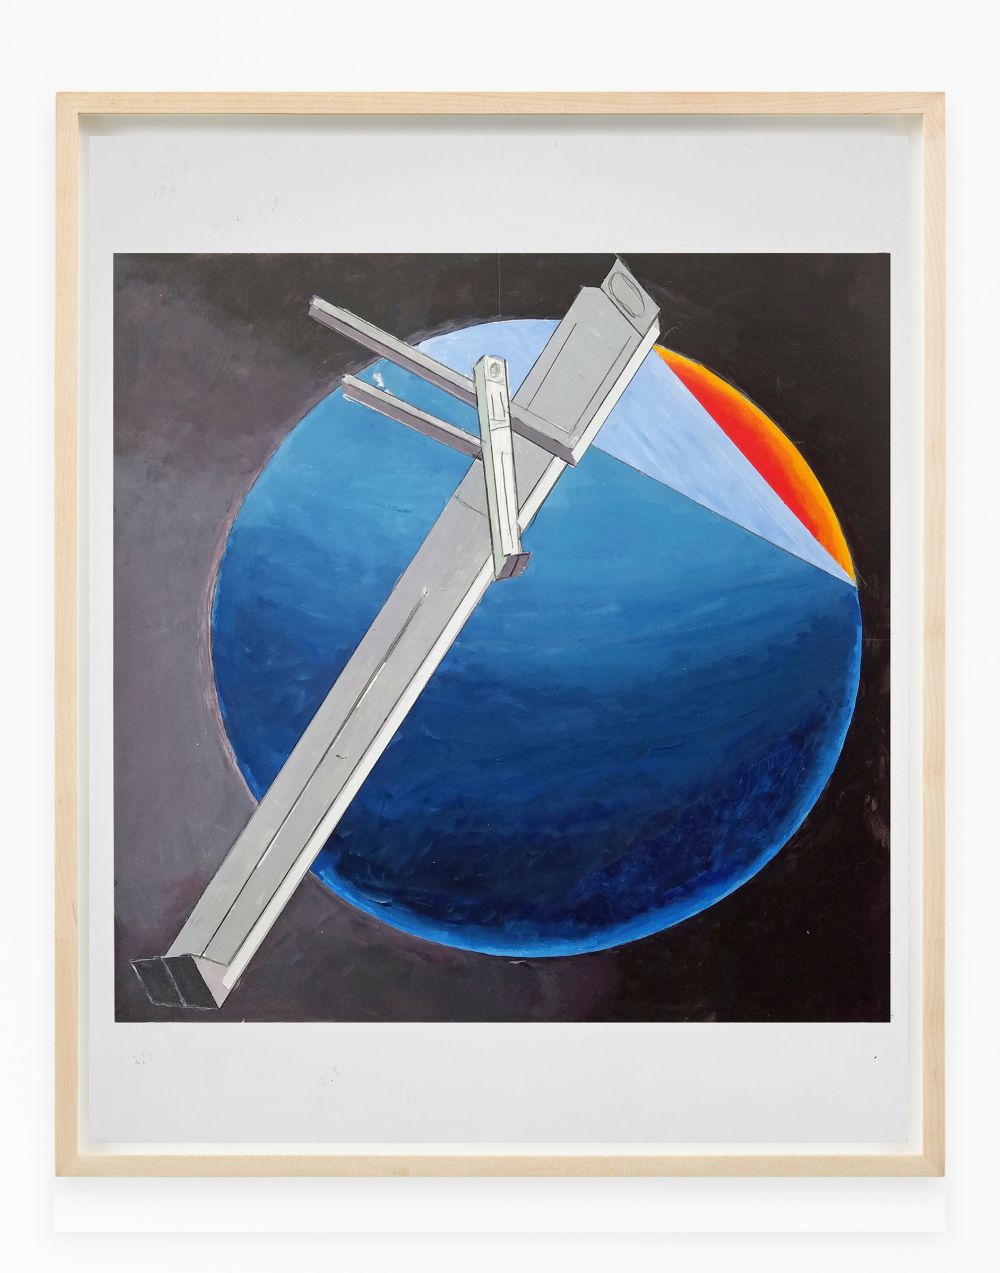 Mernet Larsen, Study for Astronauts, Sunset (after El Lissitzky), 2020